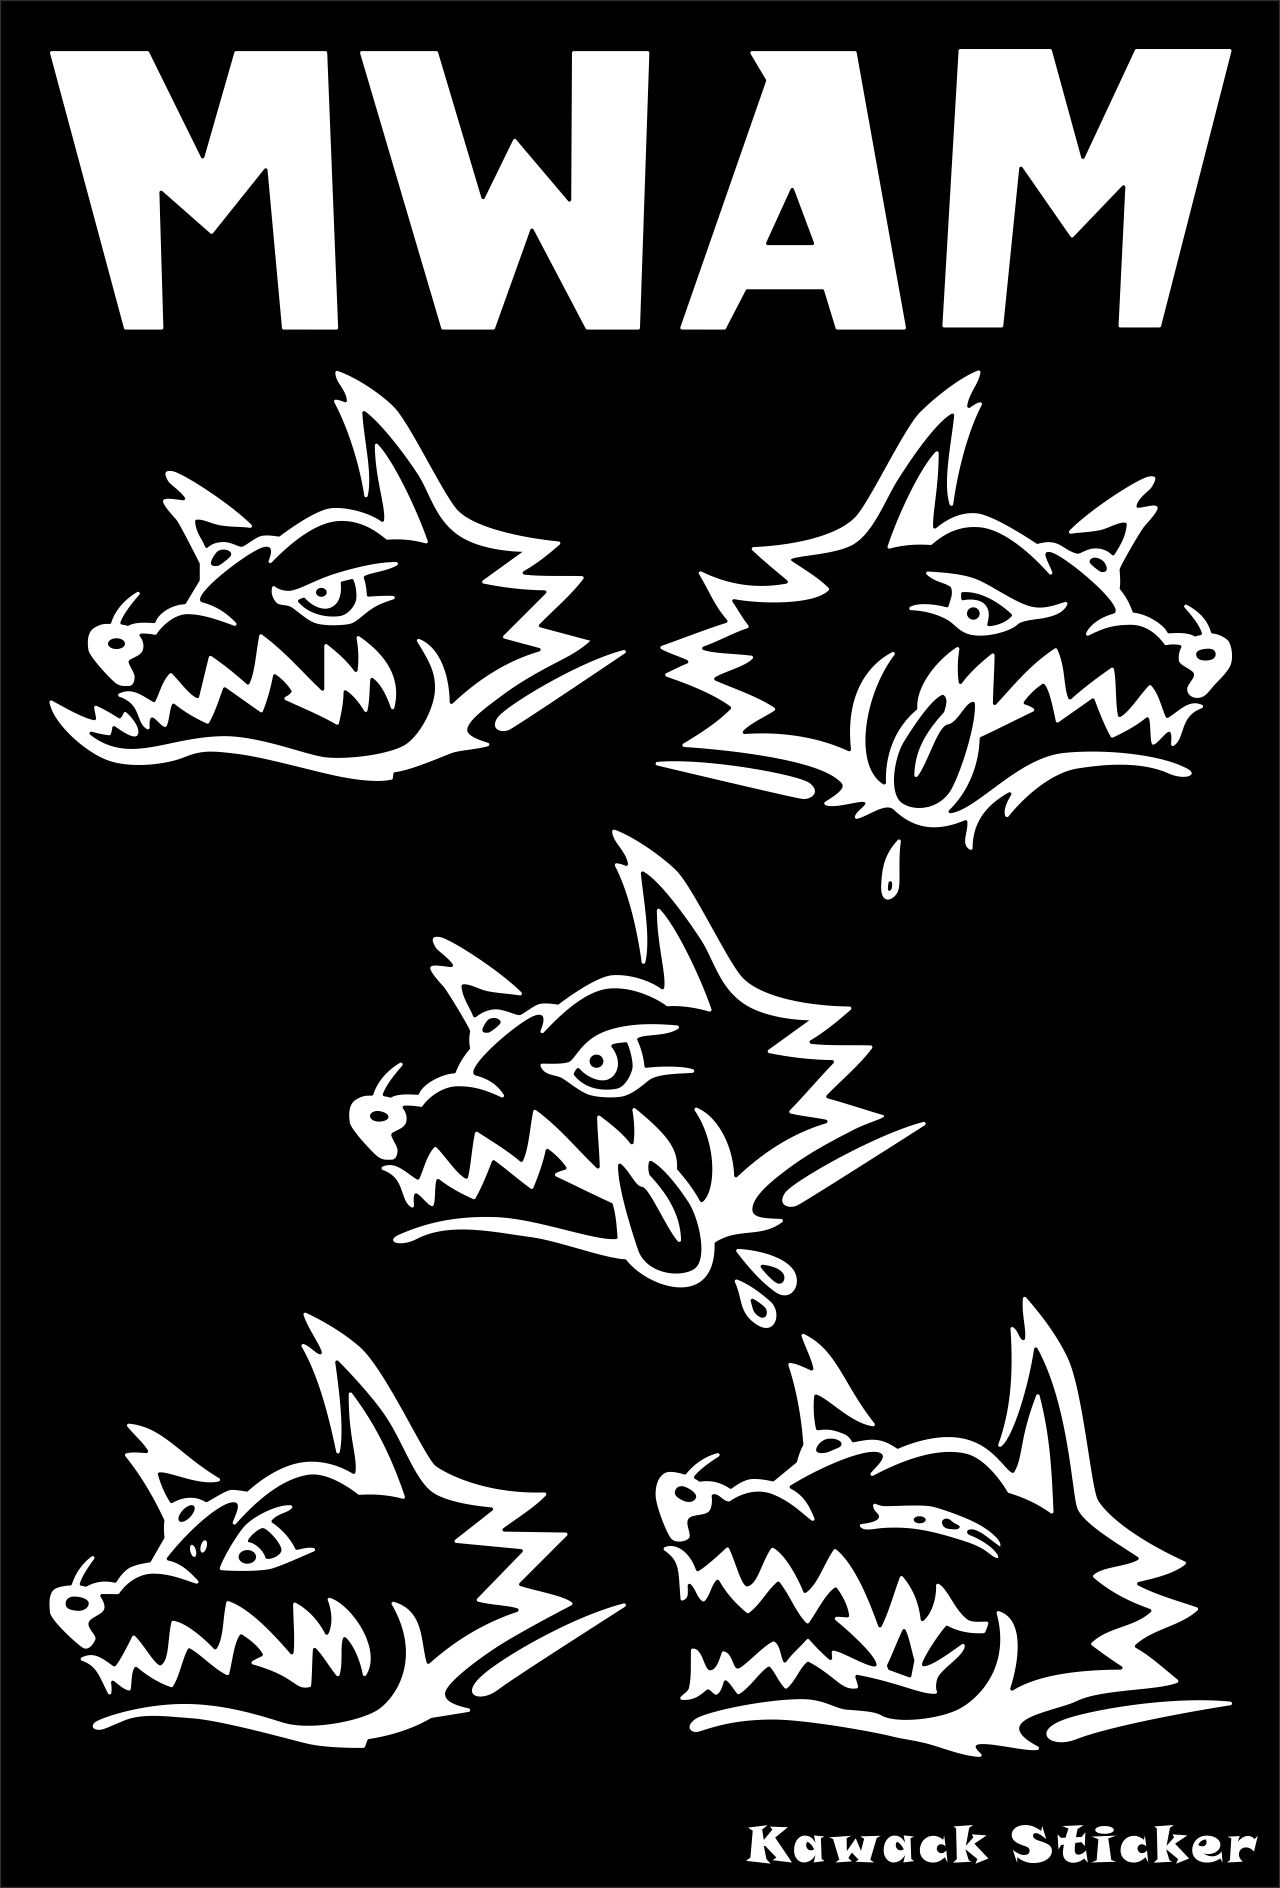 MWAM(マンウィズ)５人メンバー全員の狼ロゴ ※車用: Kawack Sticker